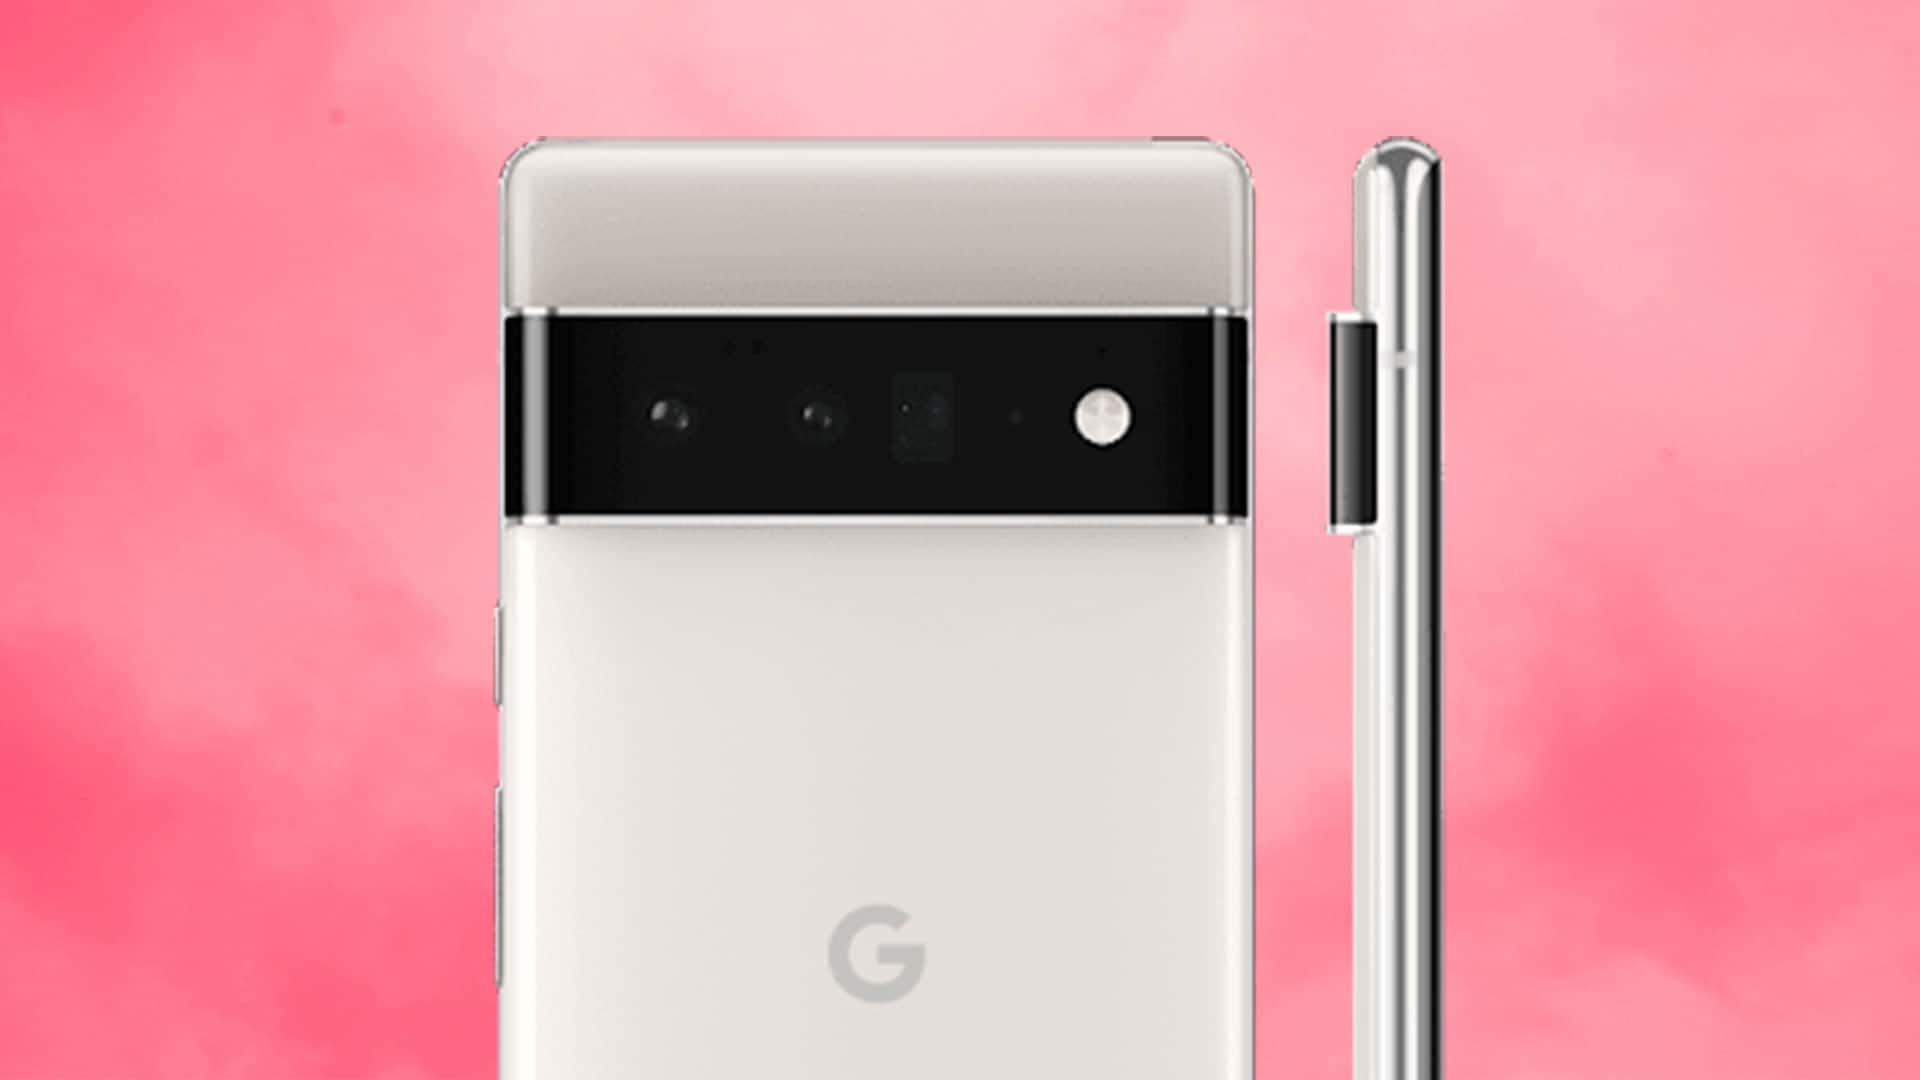 Google Pixel 6 Pro on pink background